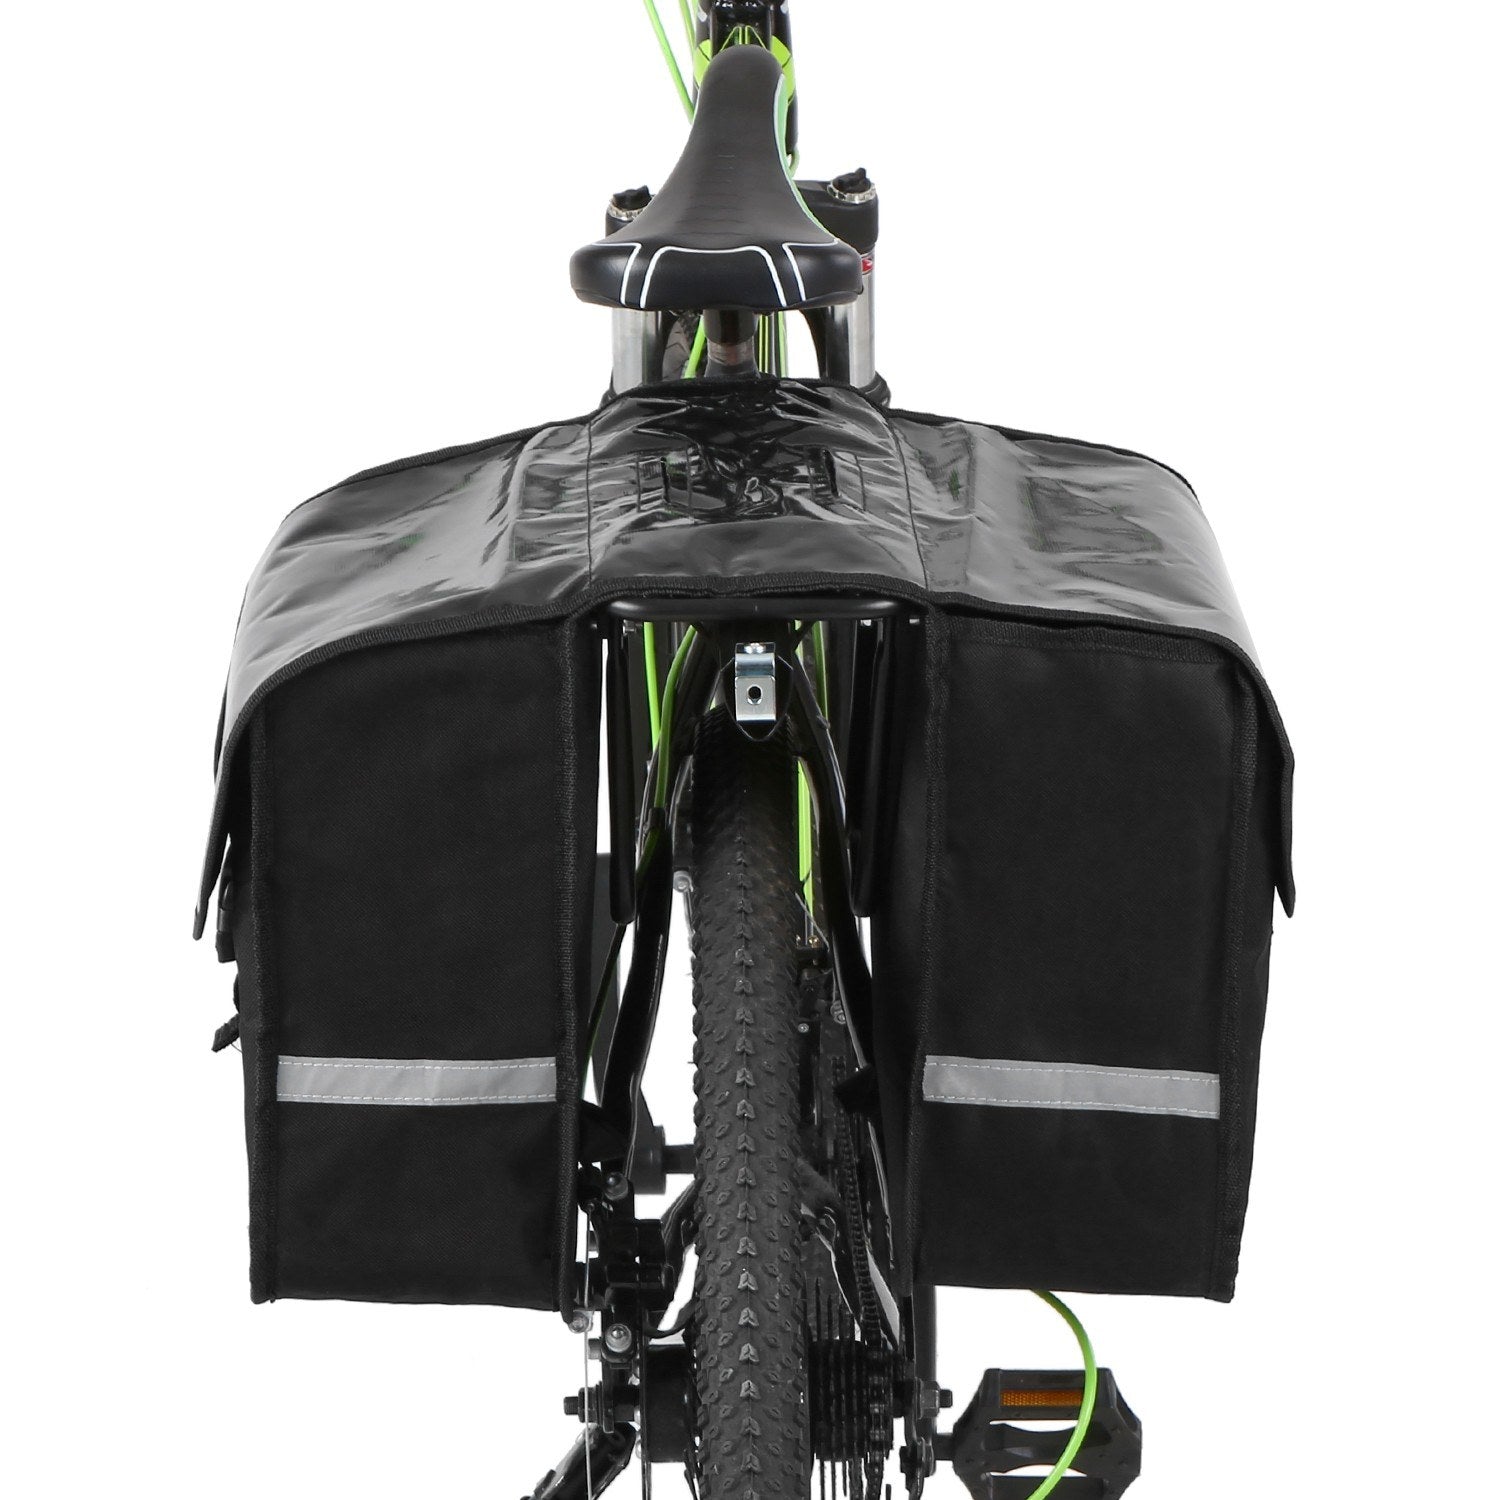 28L Water Resistant Bicycle Rear Seat Carrier Bag Rack Trunk Bags Bike Commuter Bag Pannier